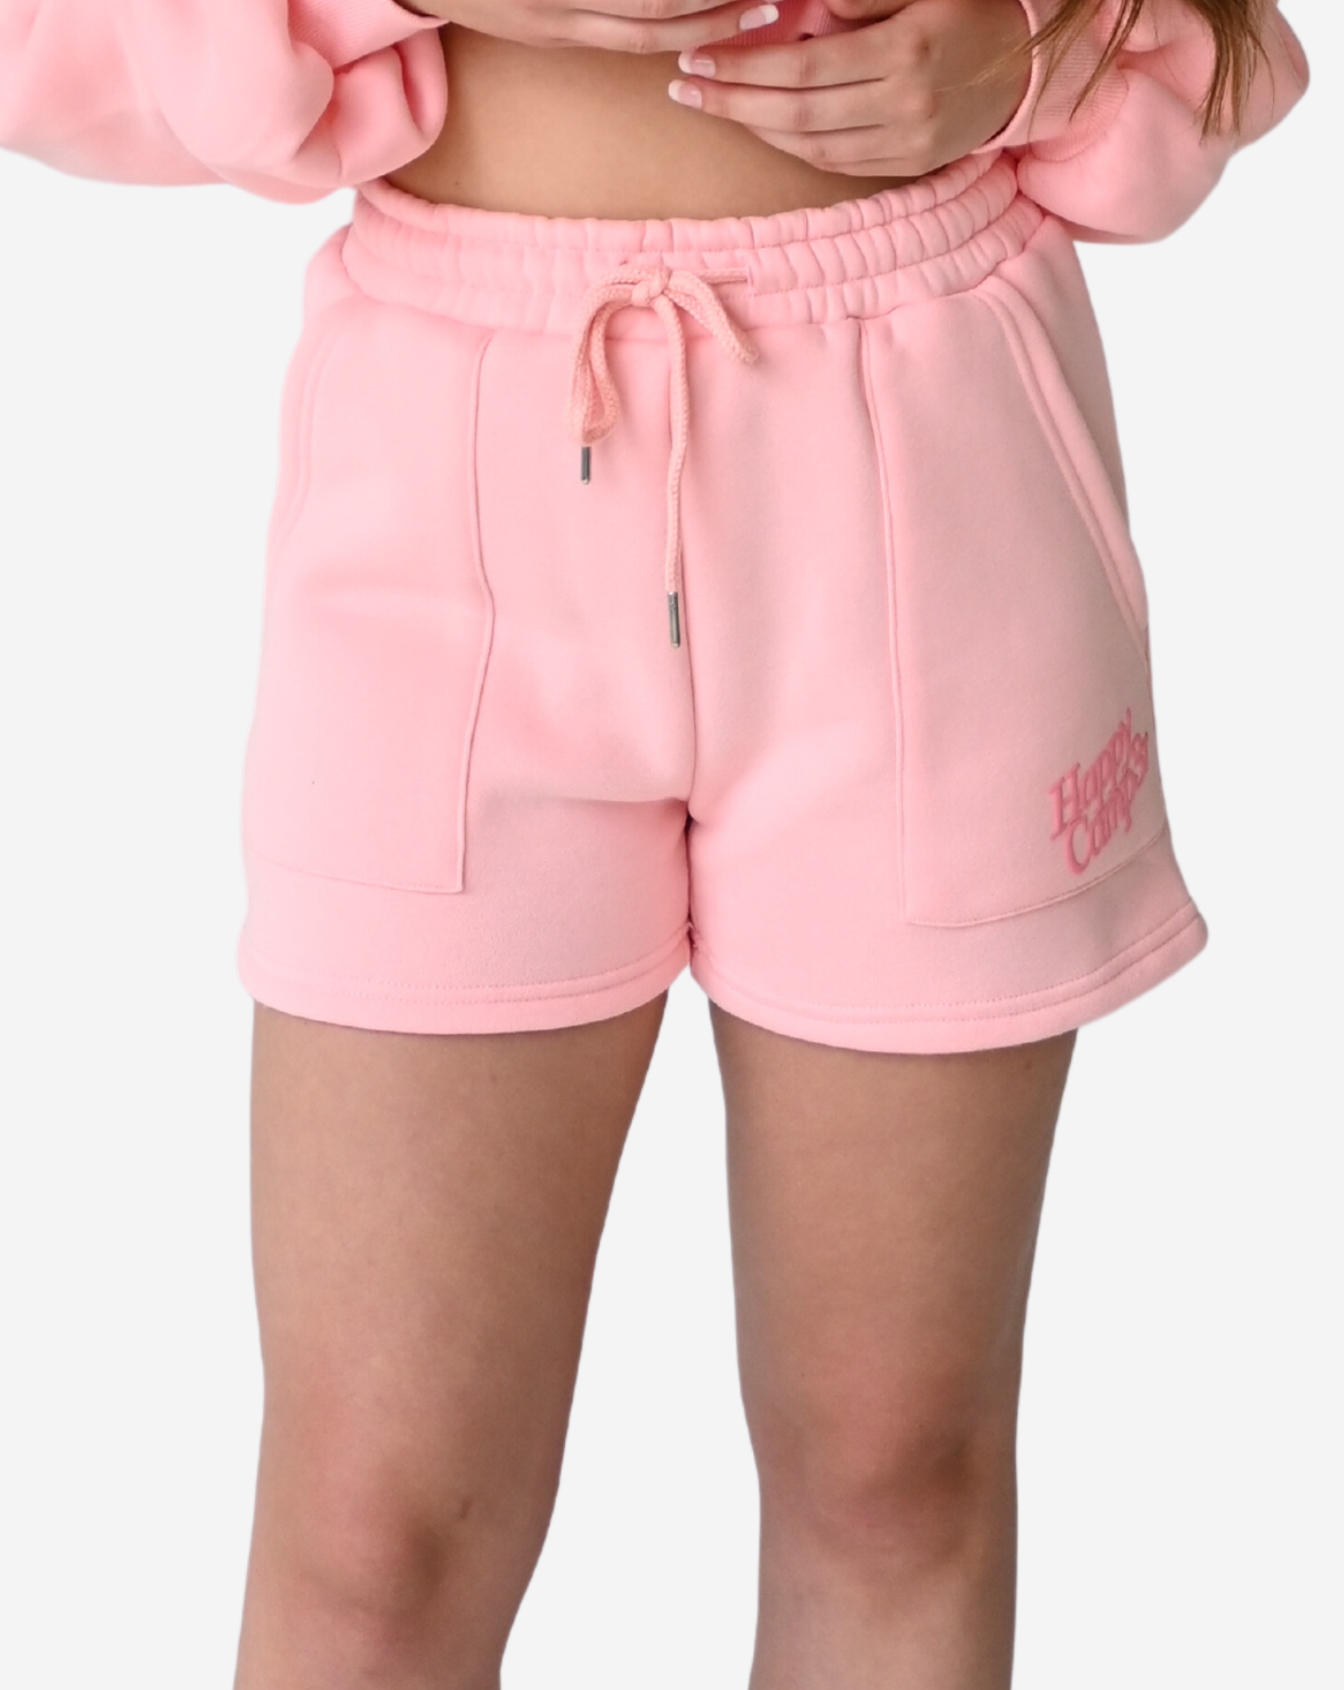 Make Beautiful Things Happen Shorts - Peony Pink